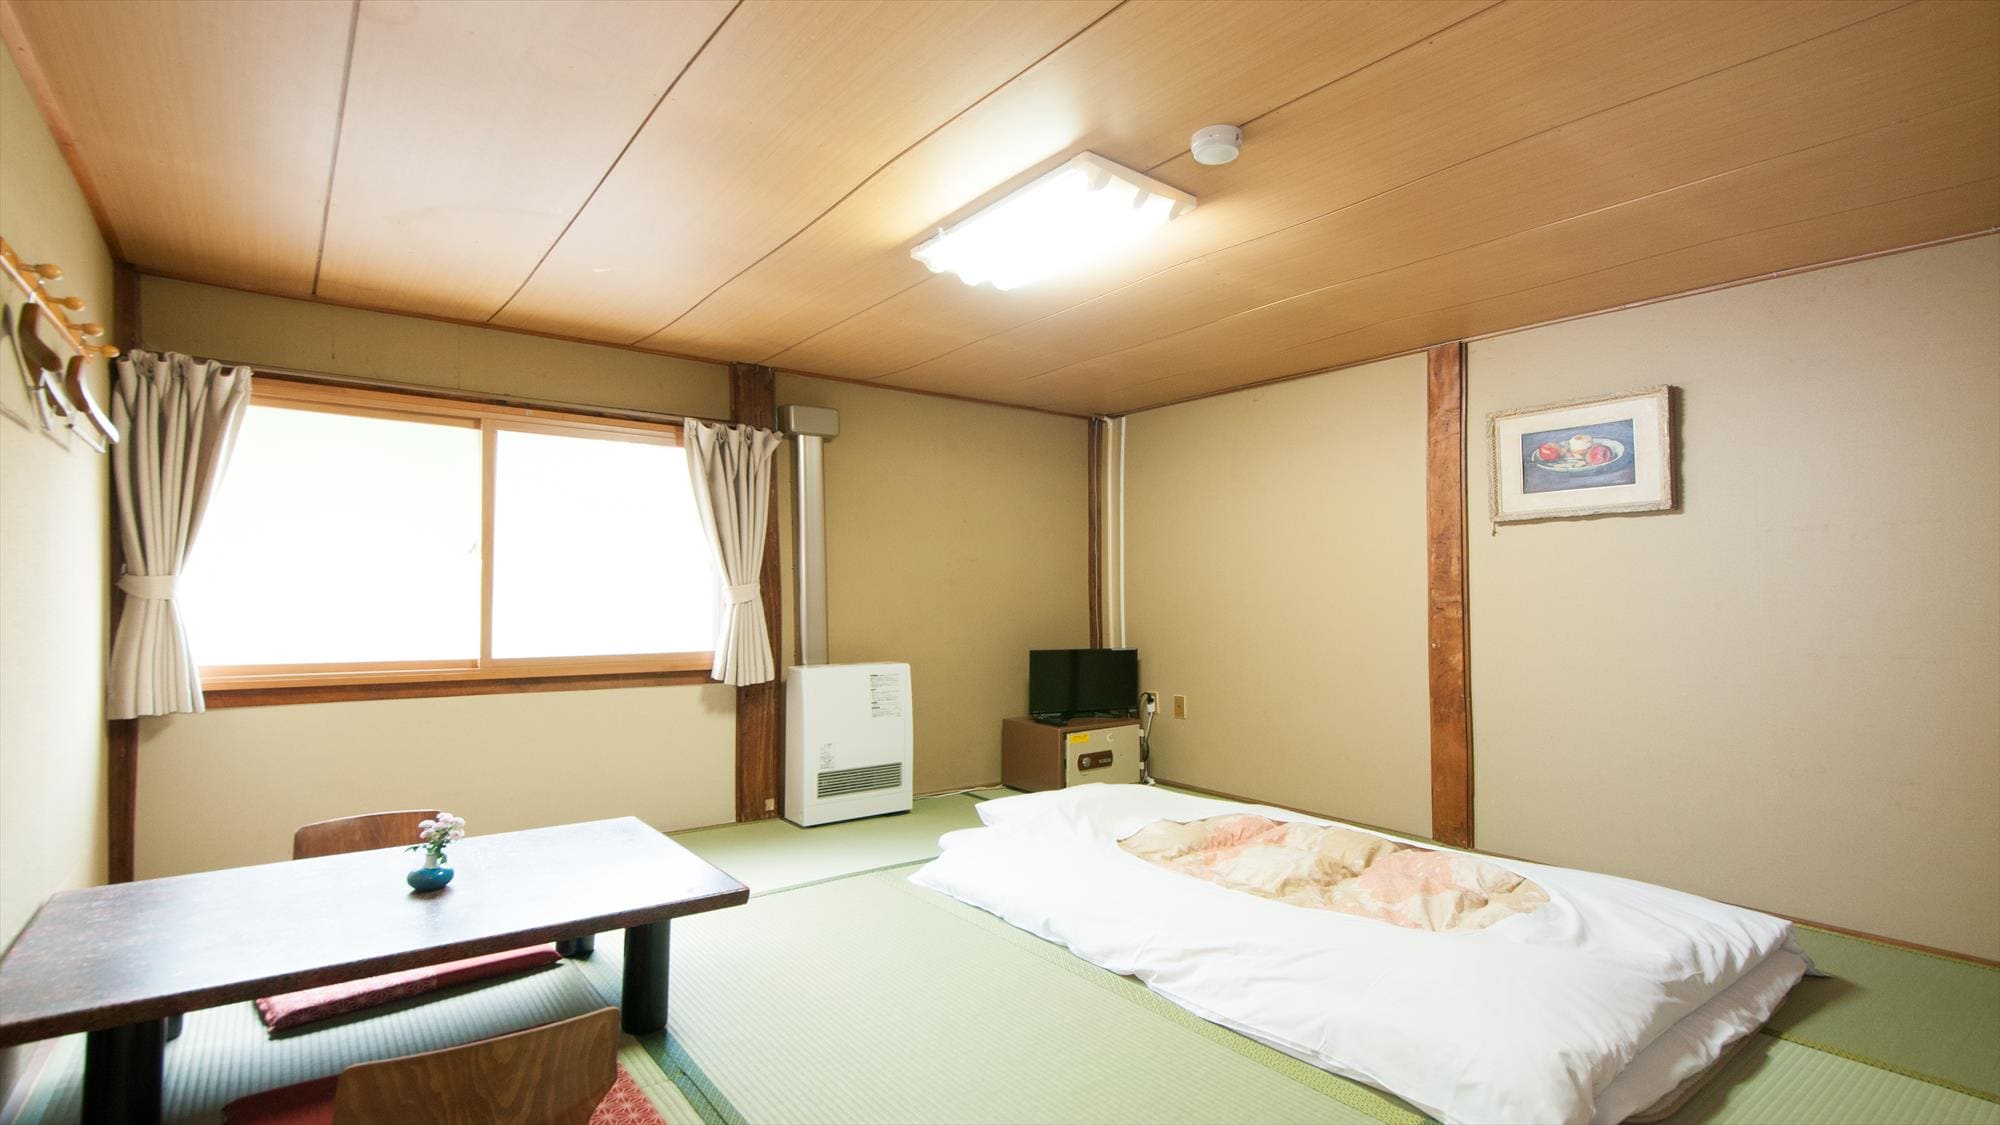 ◆ [Main Building] Japanese-style room 8 tatami mats